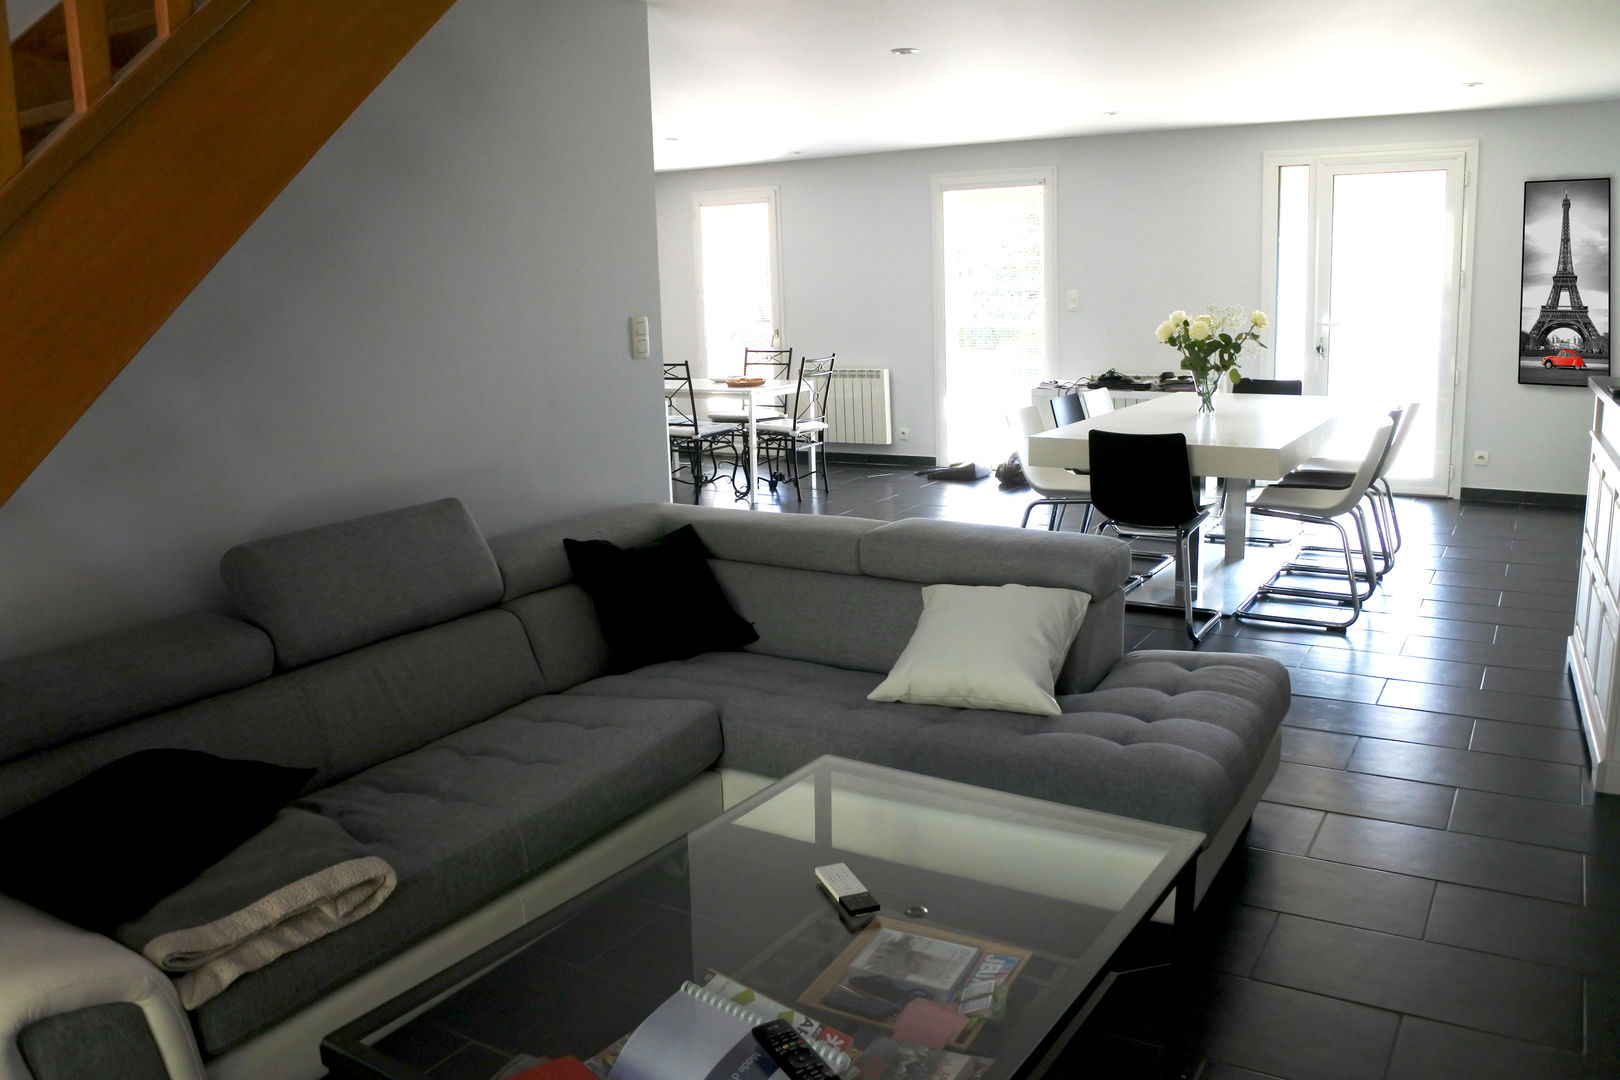 Réaménagement de maison., X-ACT DESIGN X-ACT DESIGN Modern Living Room